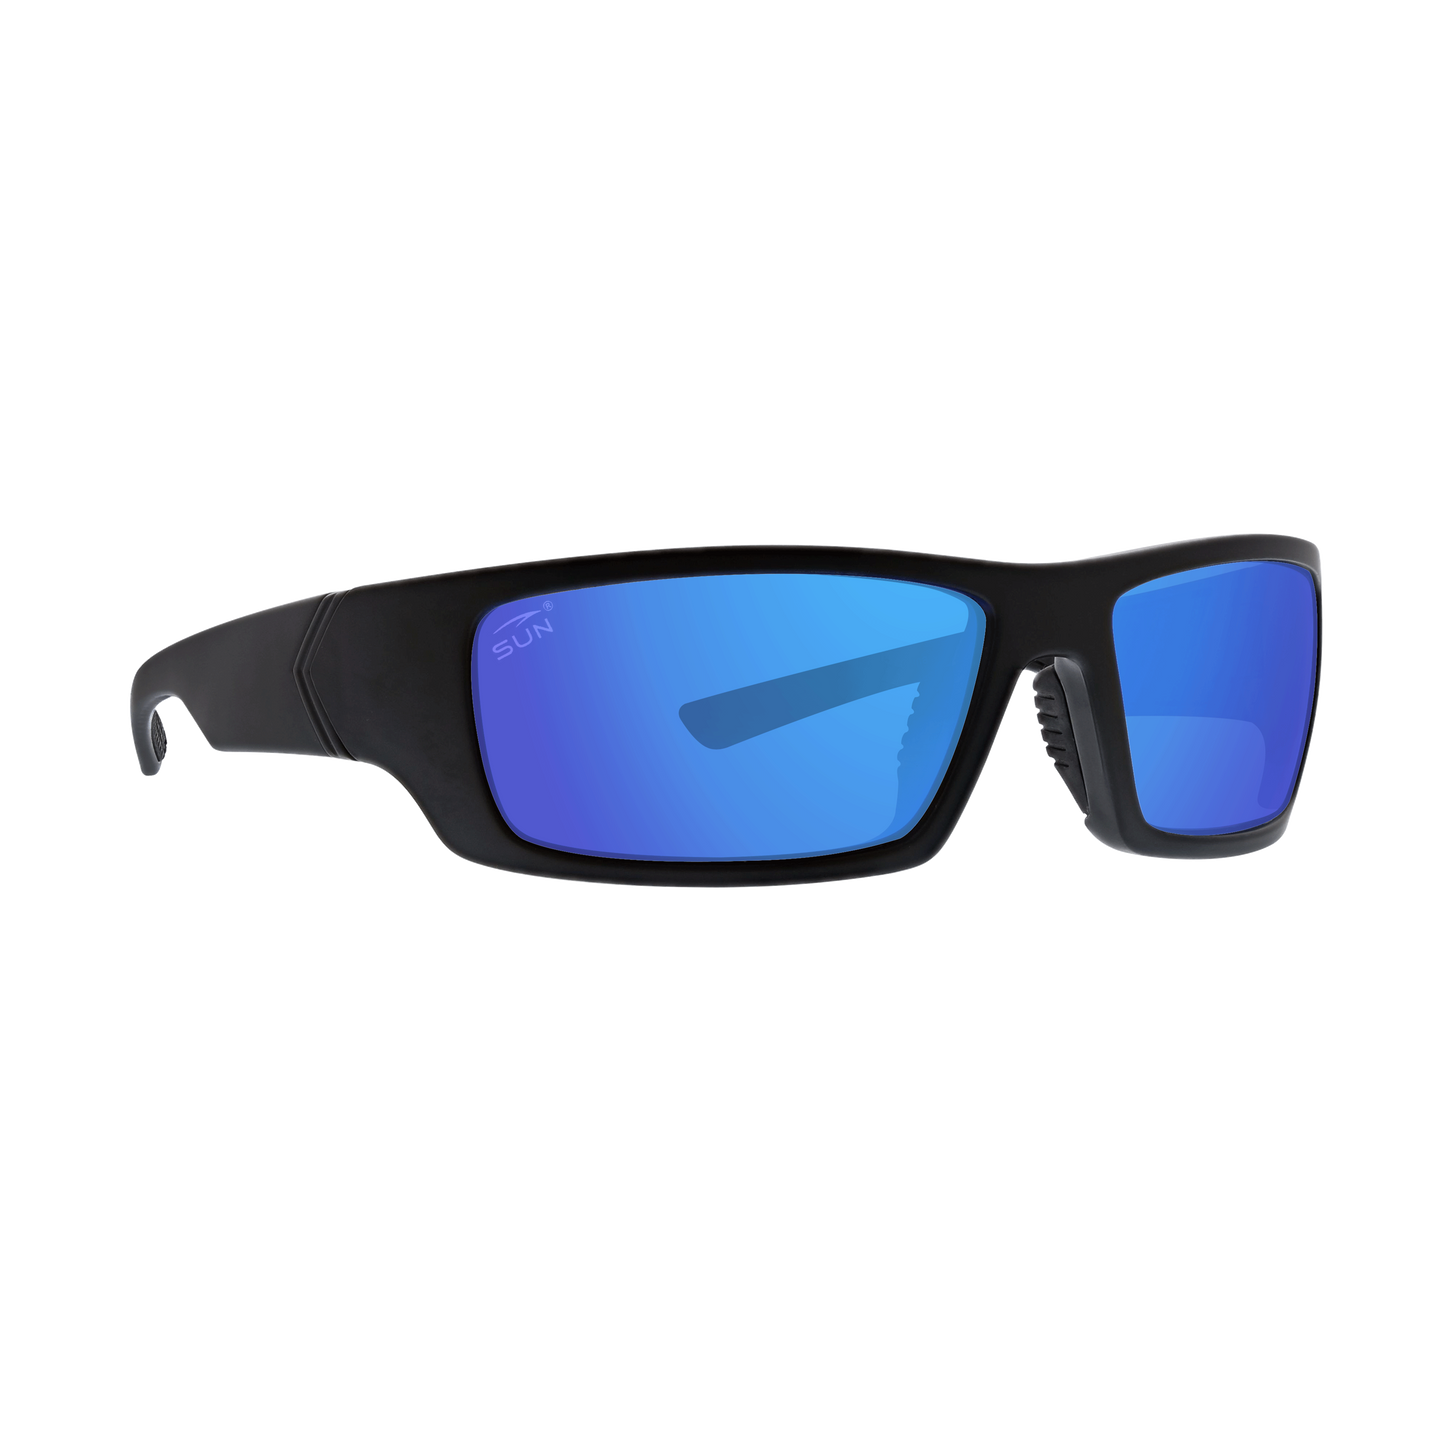 Waverider | 74101 | TruRevo Blue Polarized Lens | Matte Black Frame